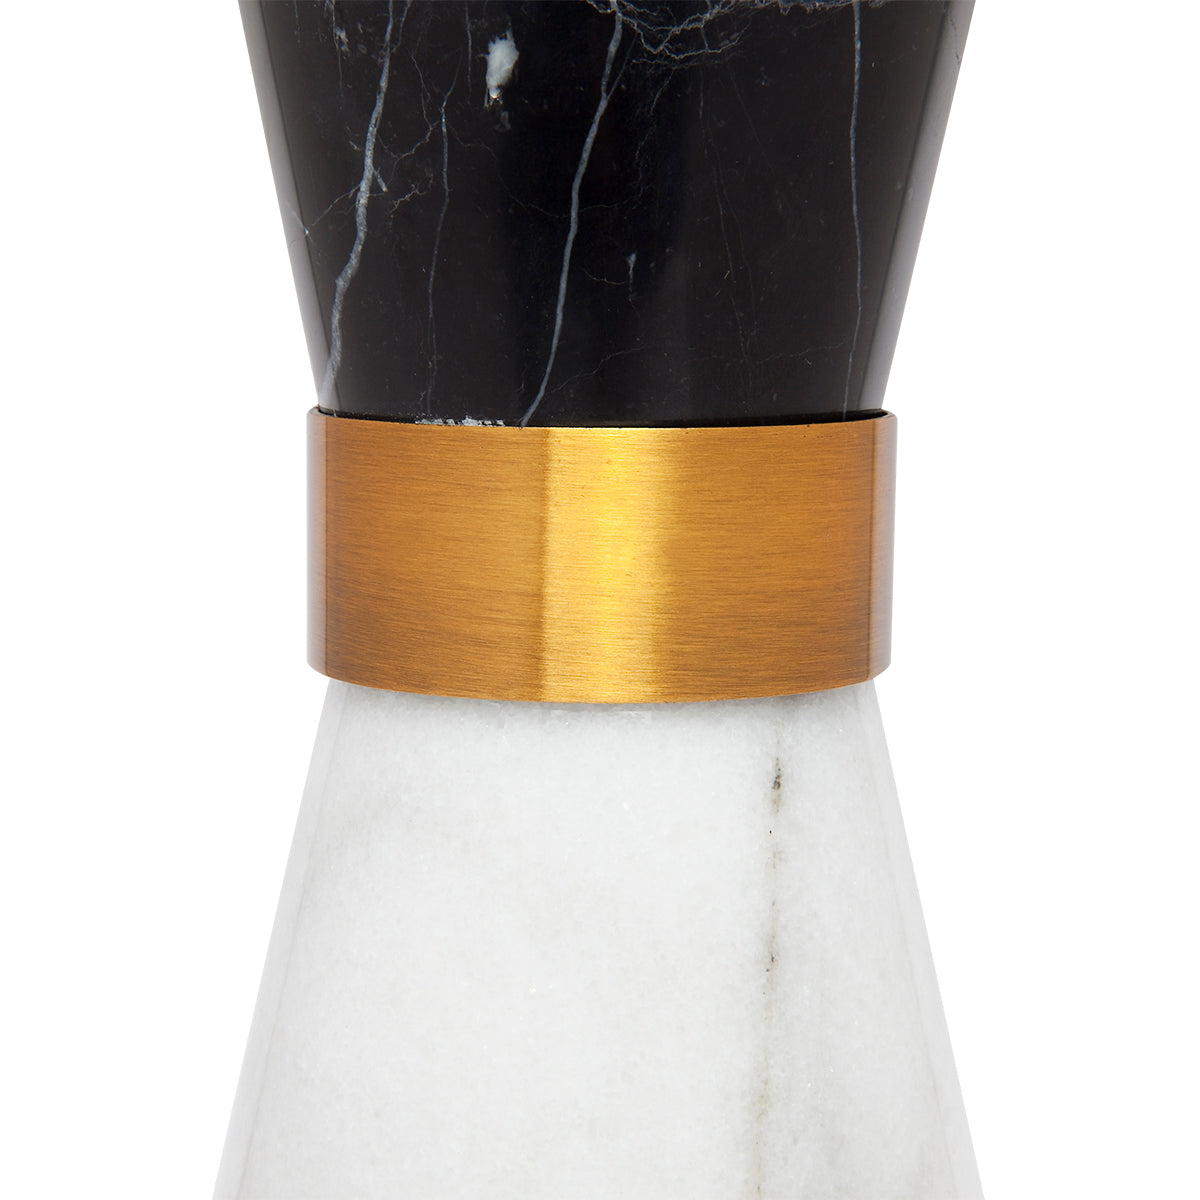 Yasmine Table Lamp with Black Shade - Notbrand